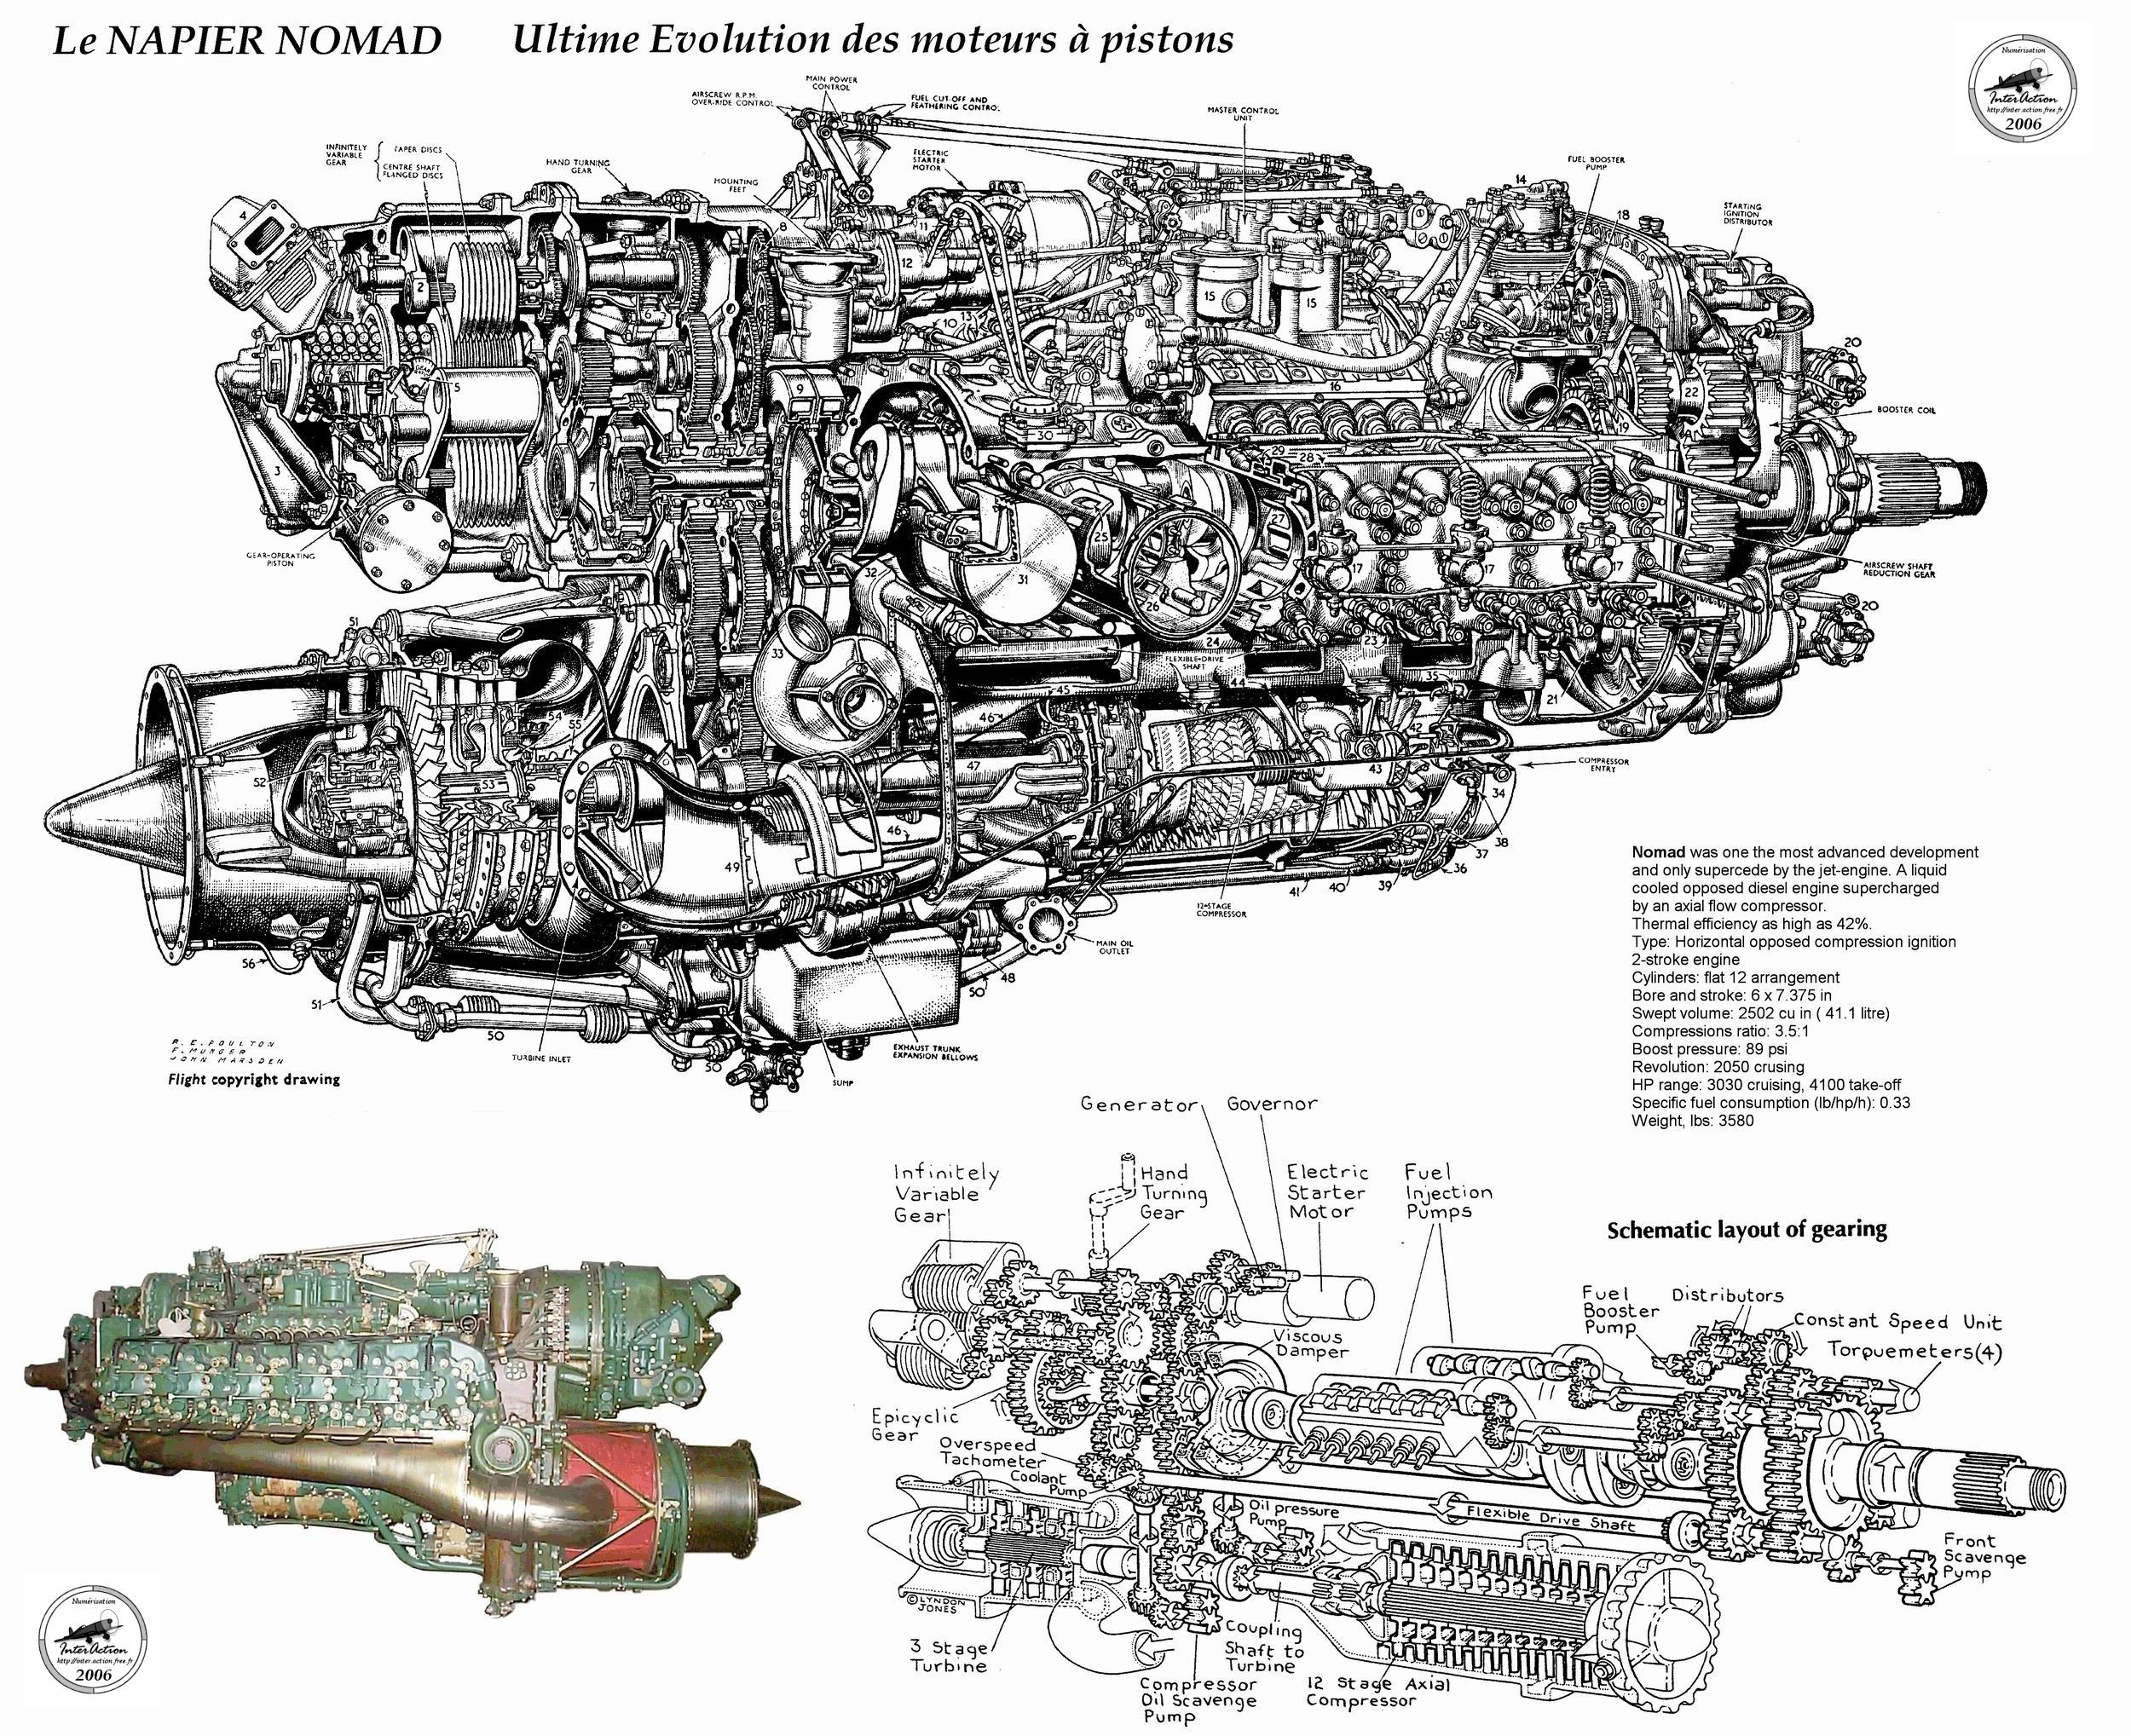 Jet Engine Schematic Diagrams